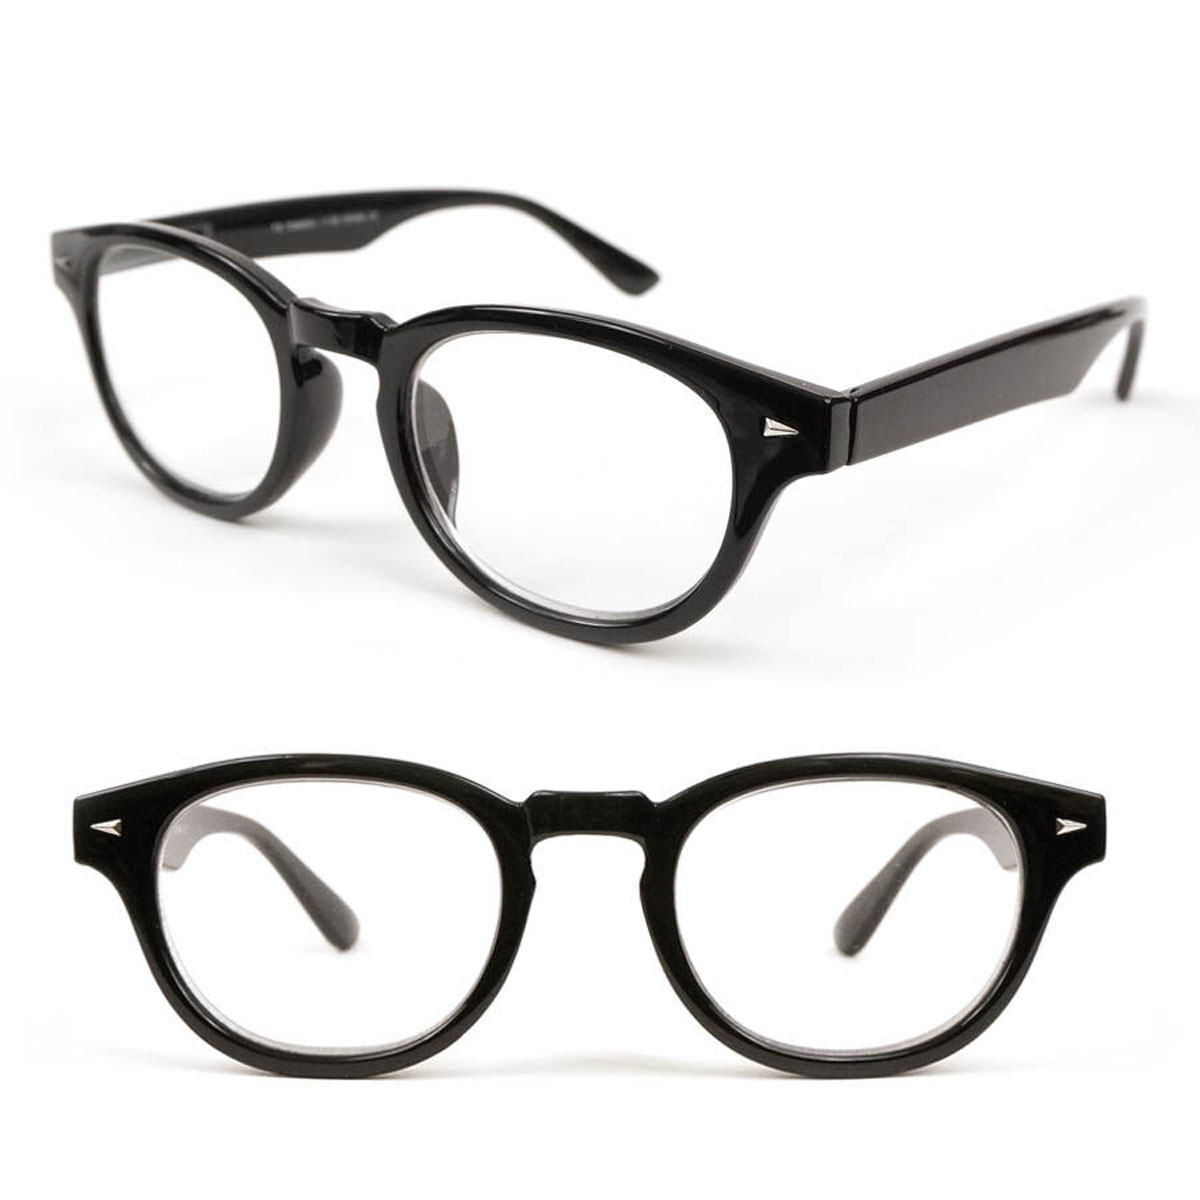 Medium Round Classic Frame Reading Glasses Geek Retro Vintage Style 100-375 - Black, +1.00